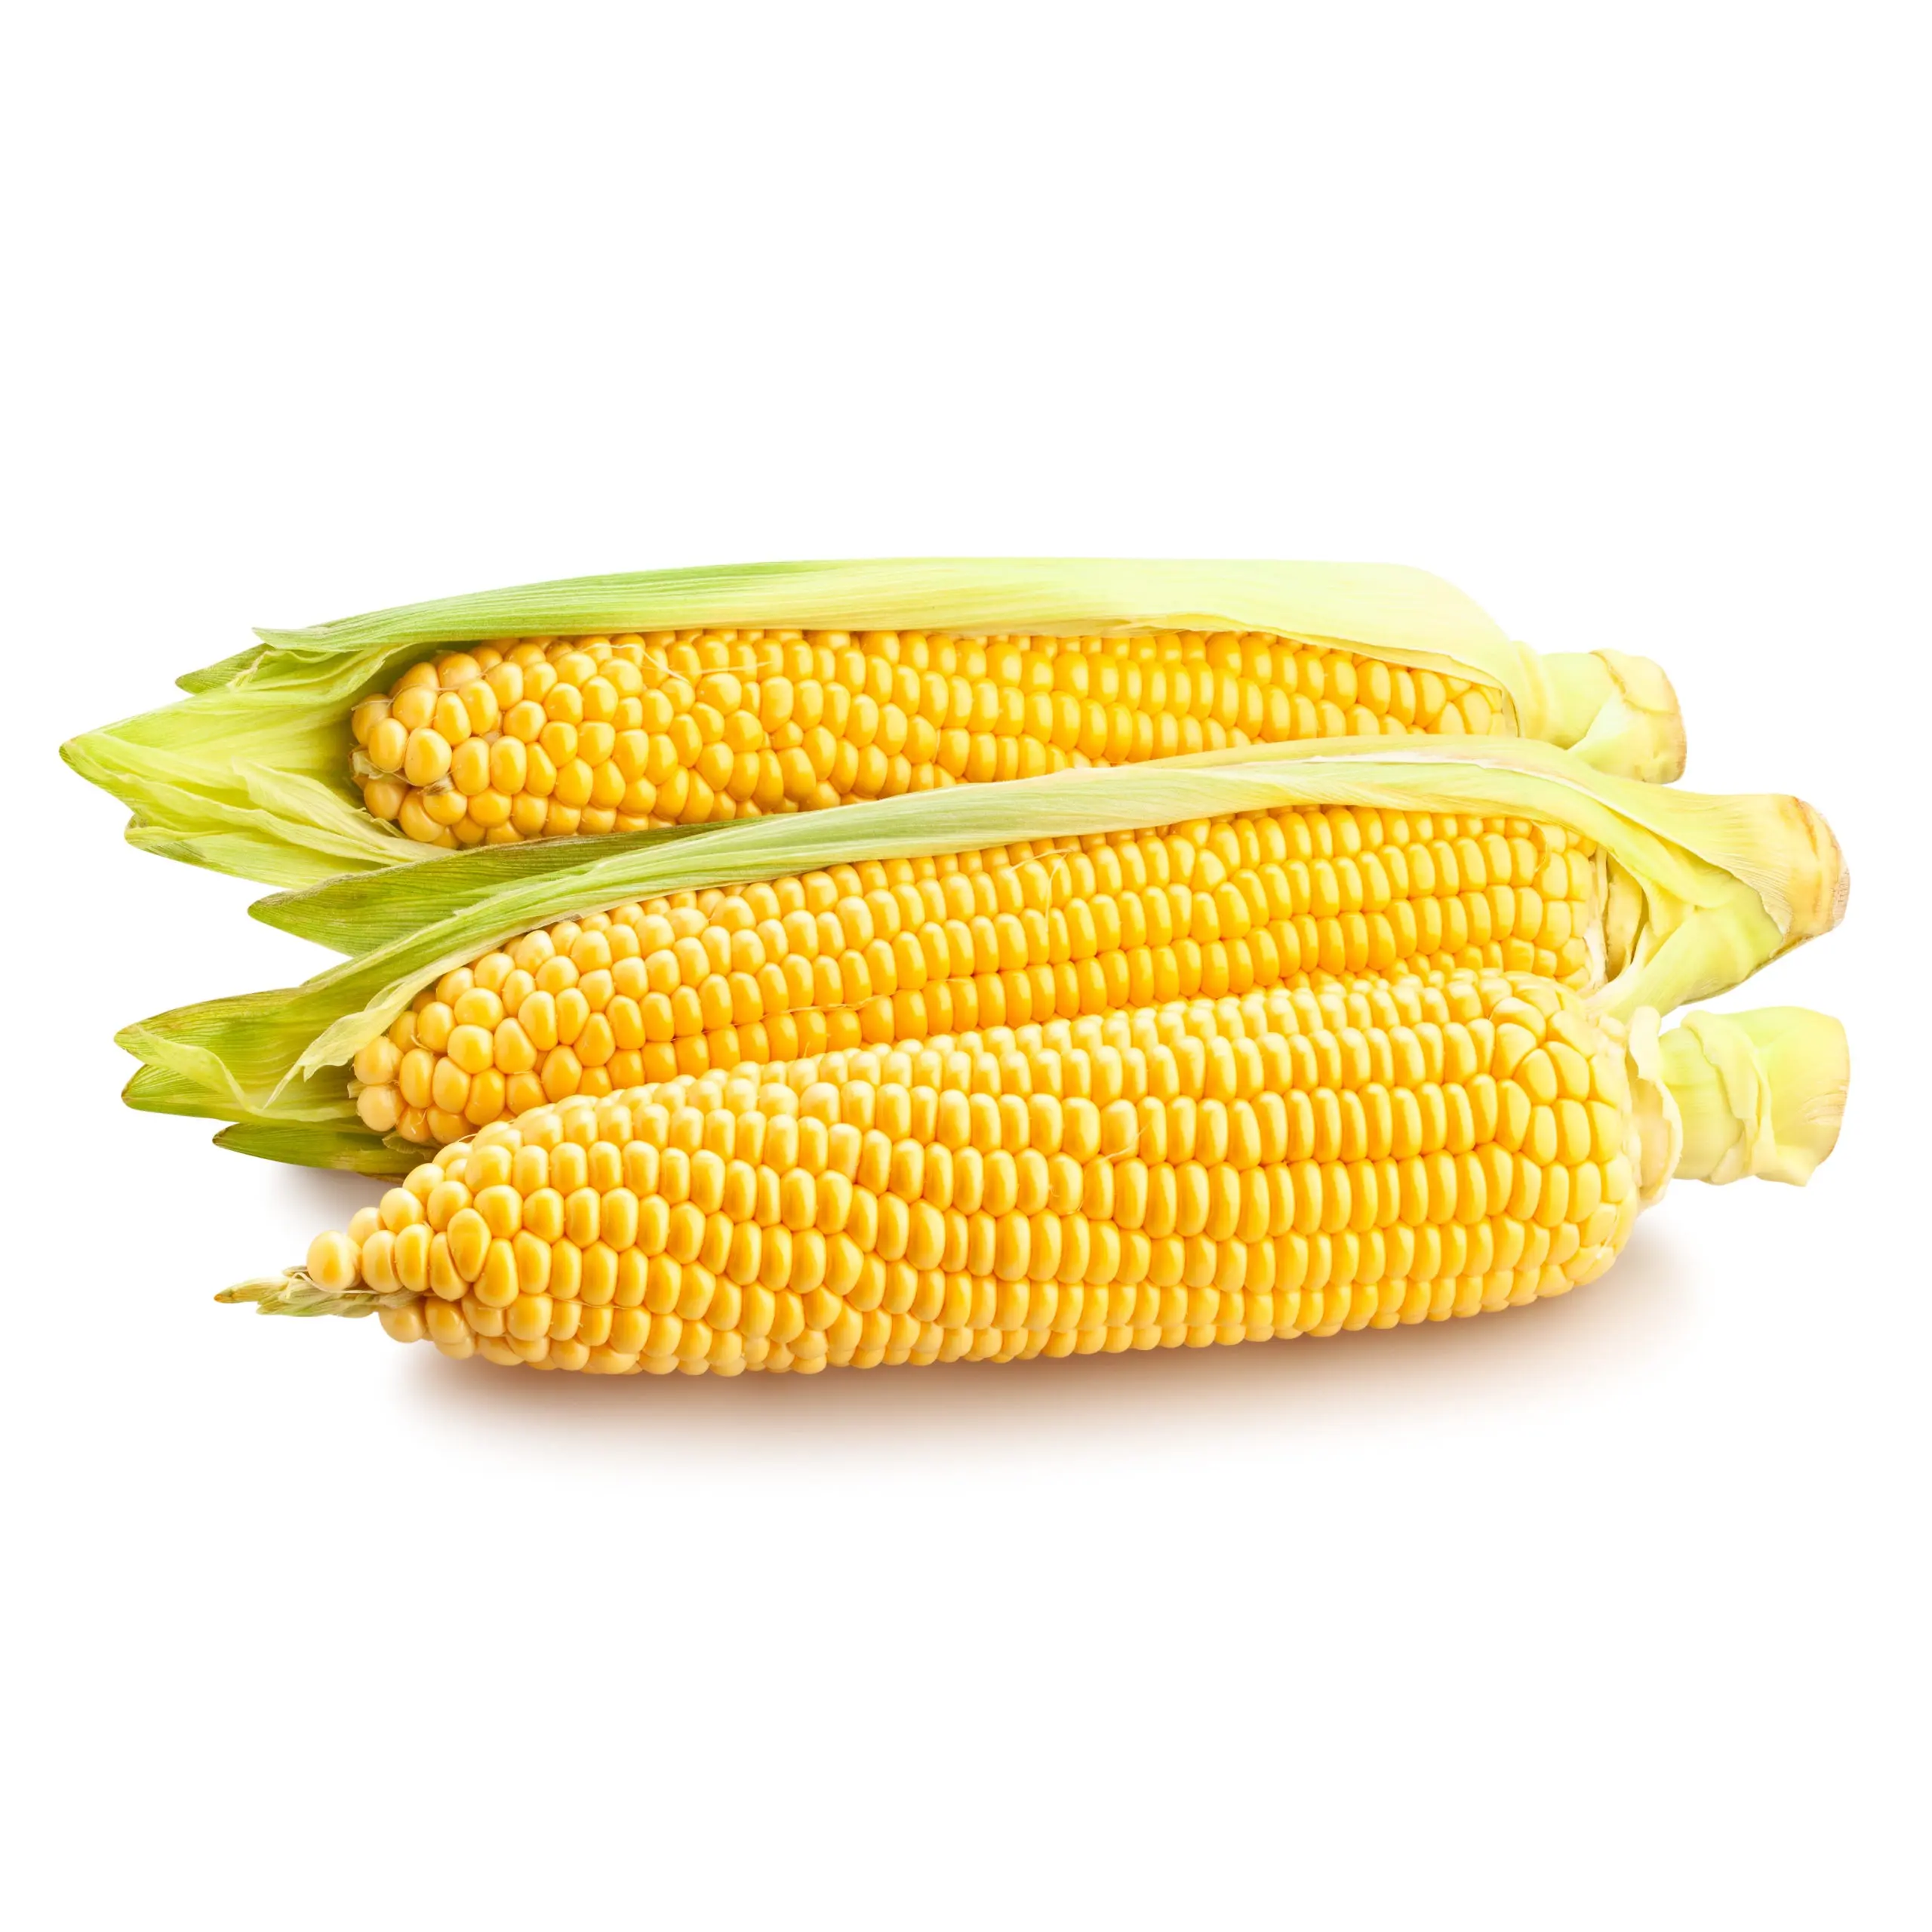 Maíz amarillo al por mayor/maíz amarillo para consumo humano maíz amarillo no GMO/maíz amarillo